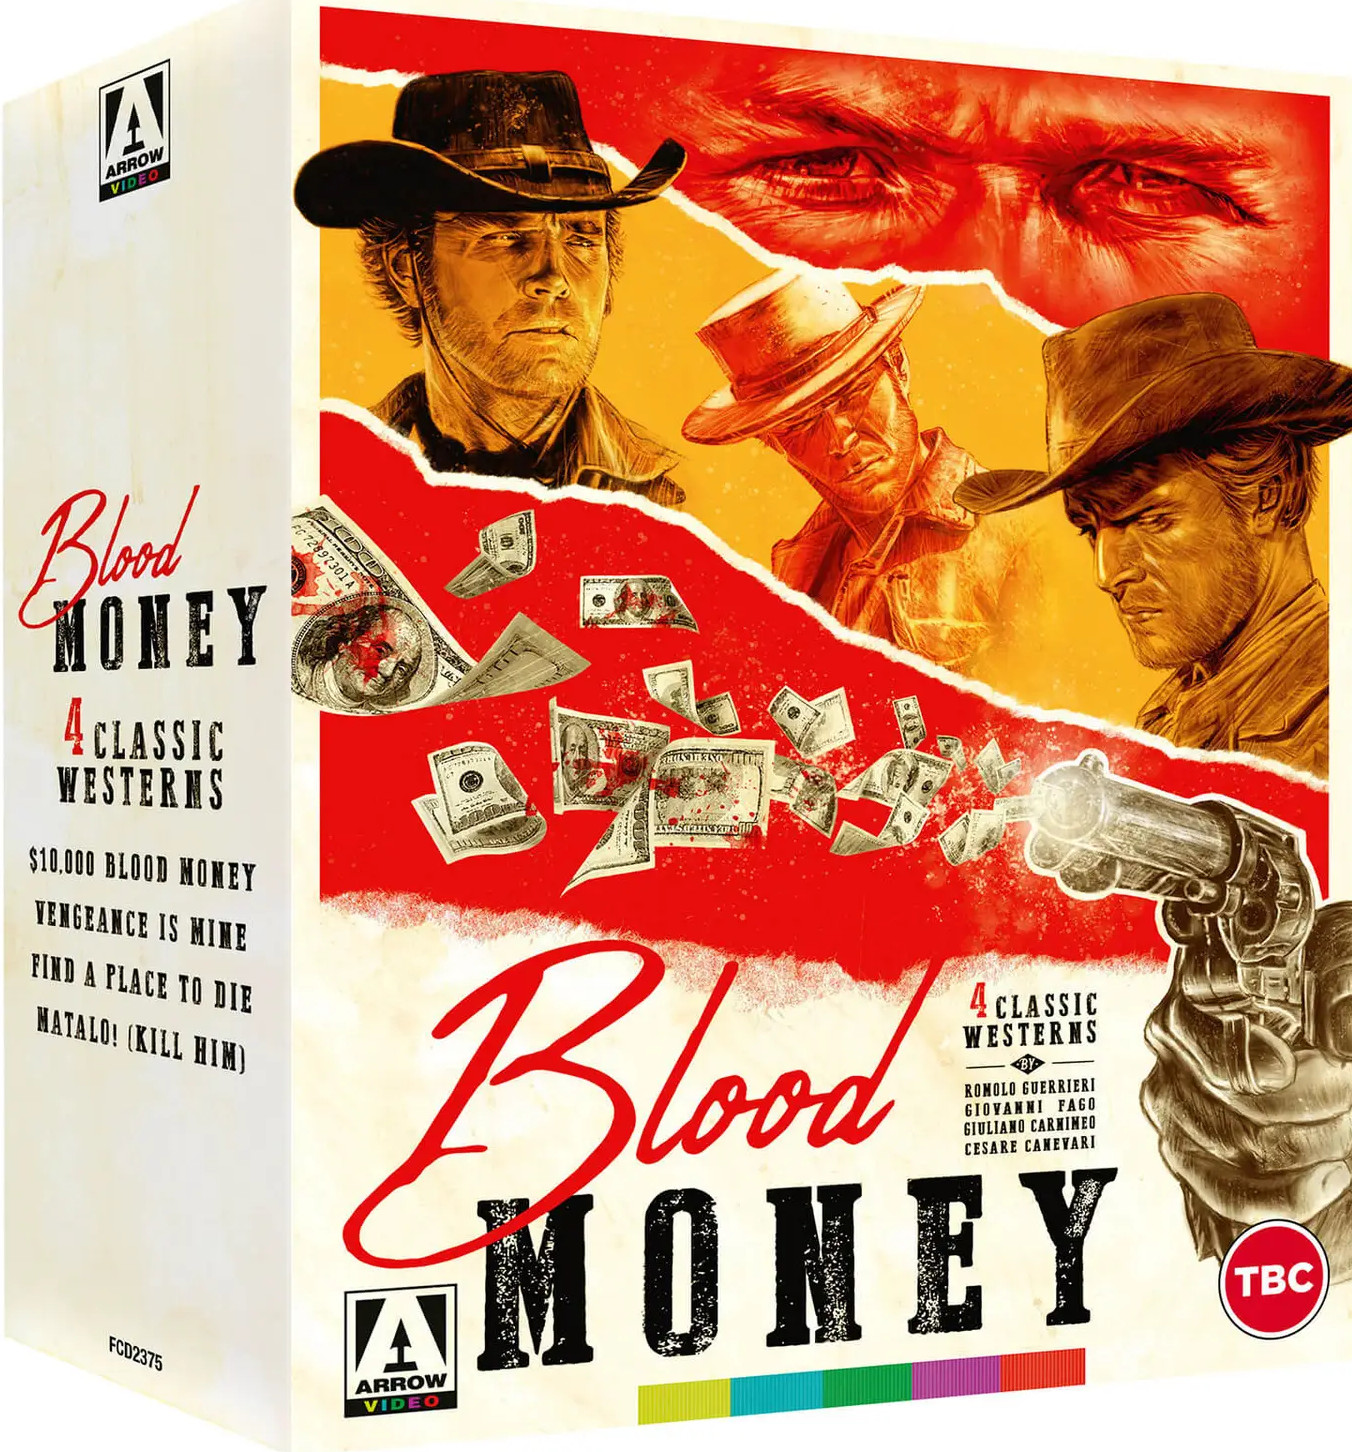 Blood Money – four western classics.